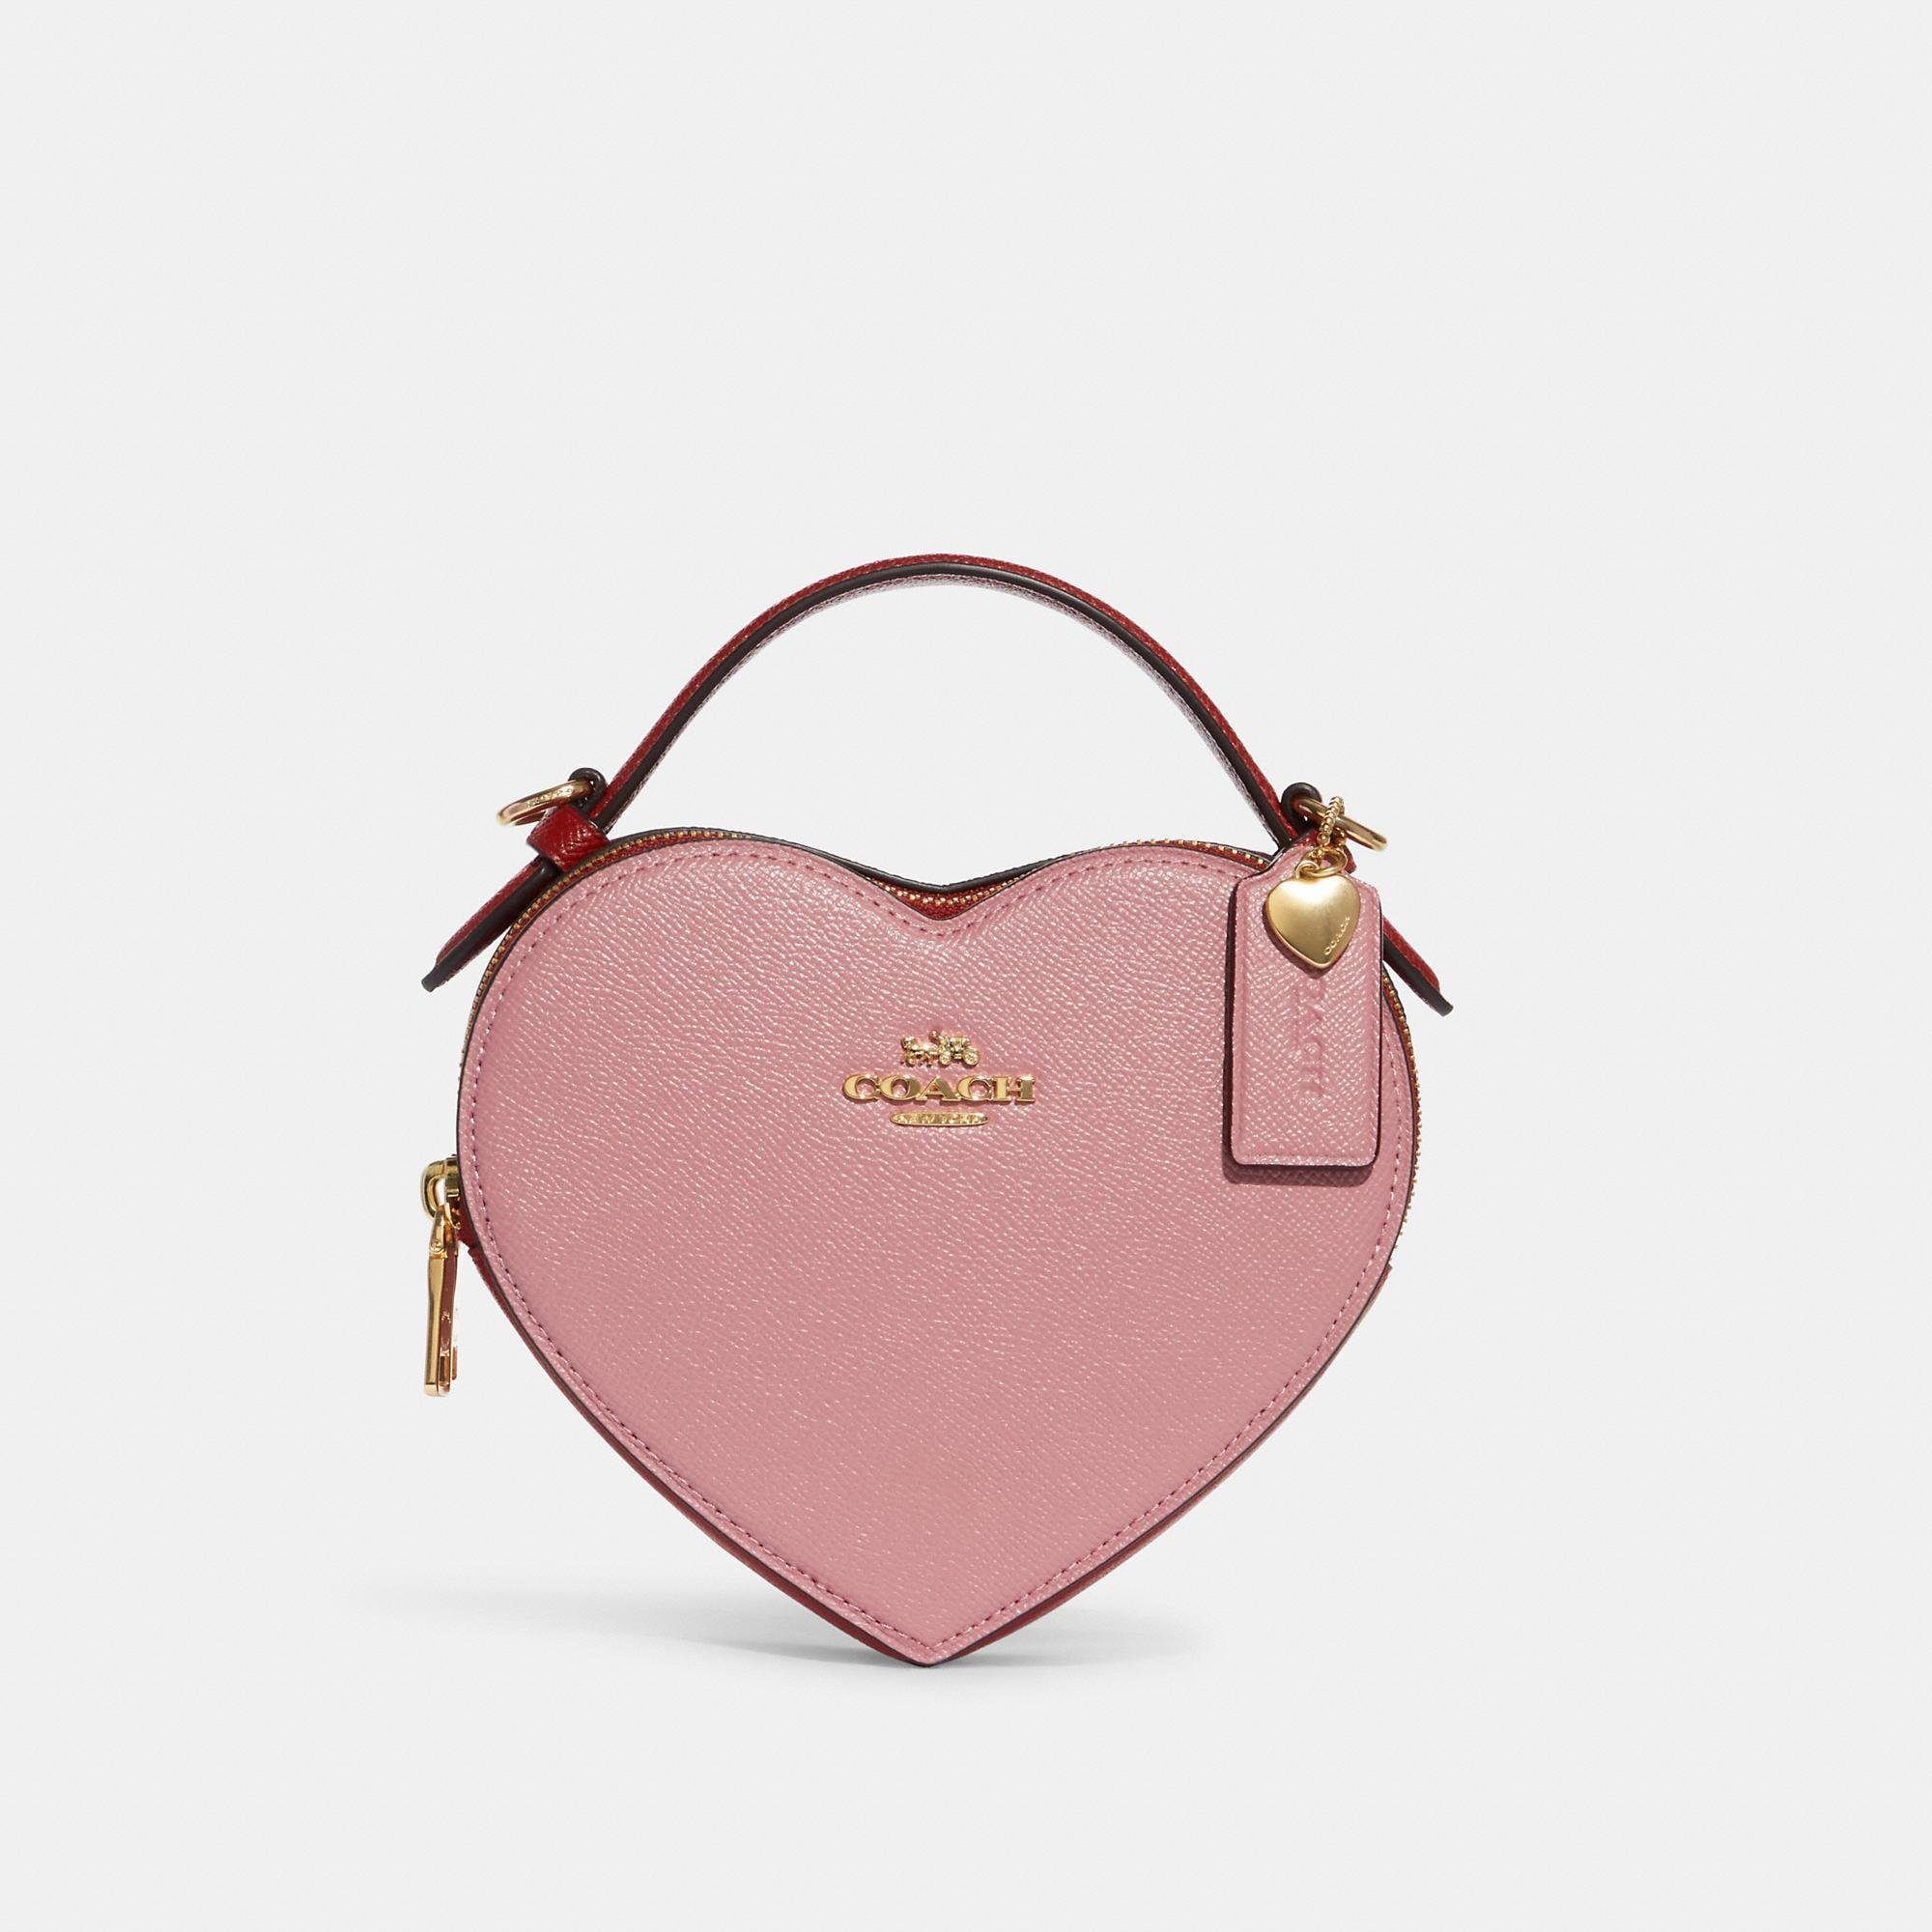 Introducir 33+ imagen pink coach handbags